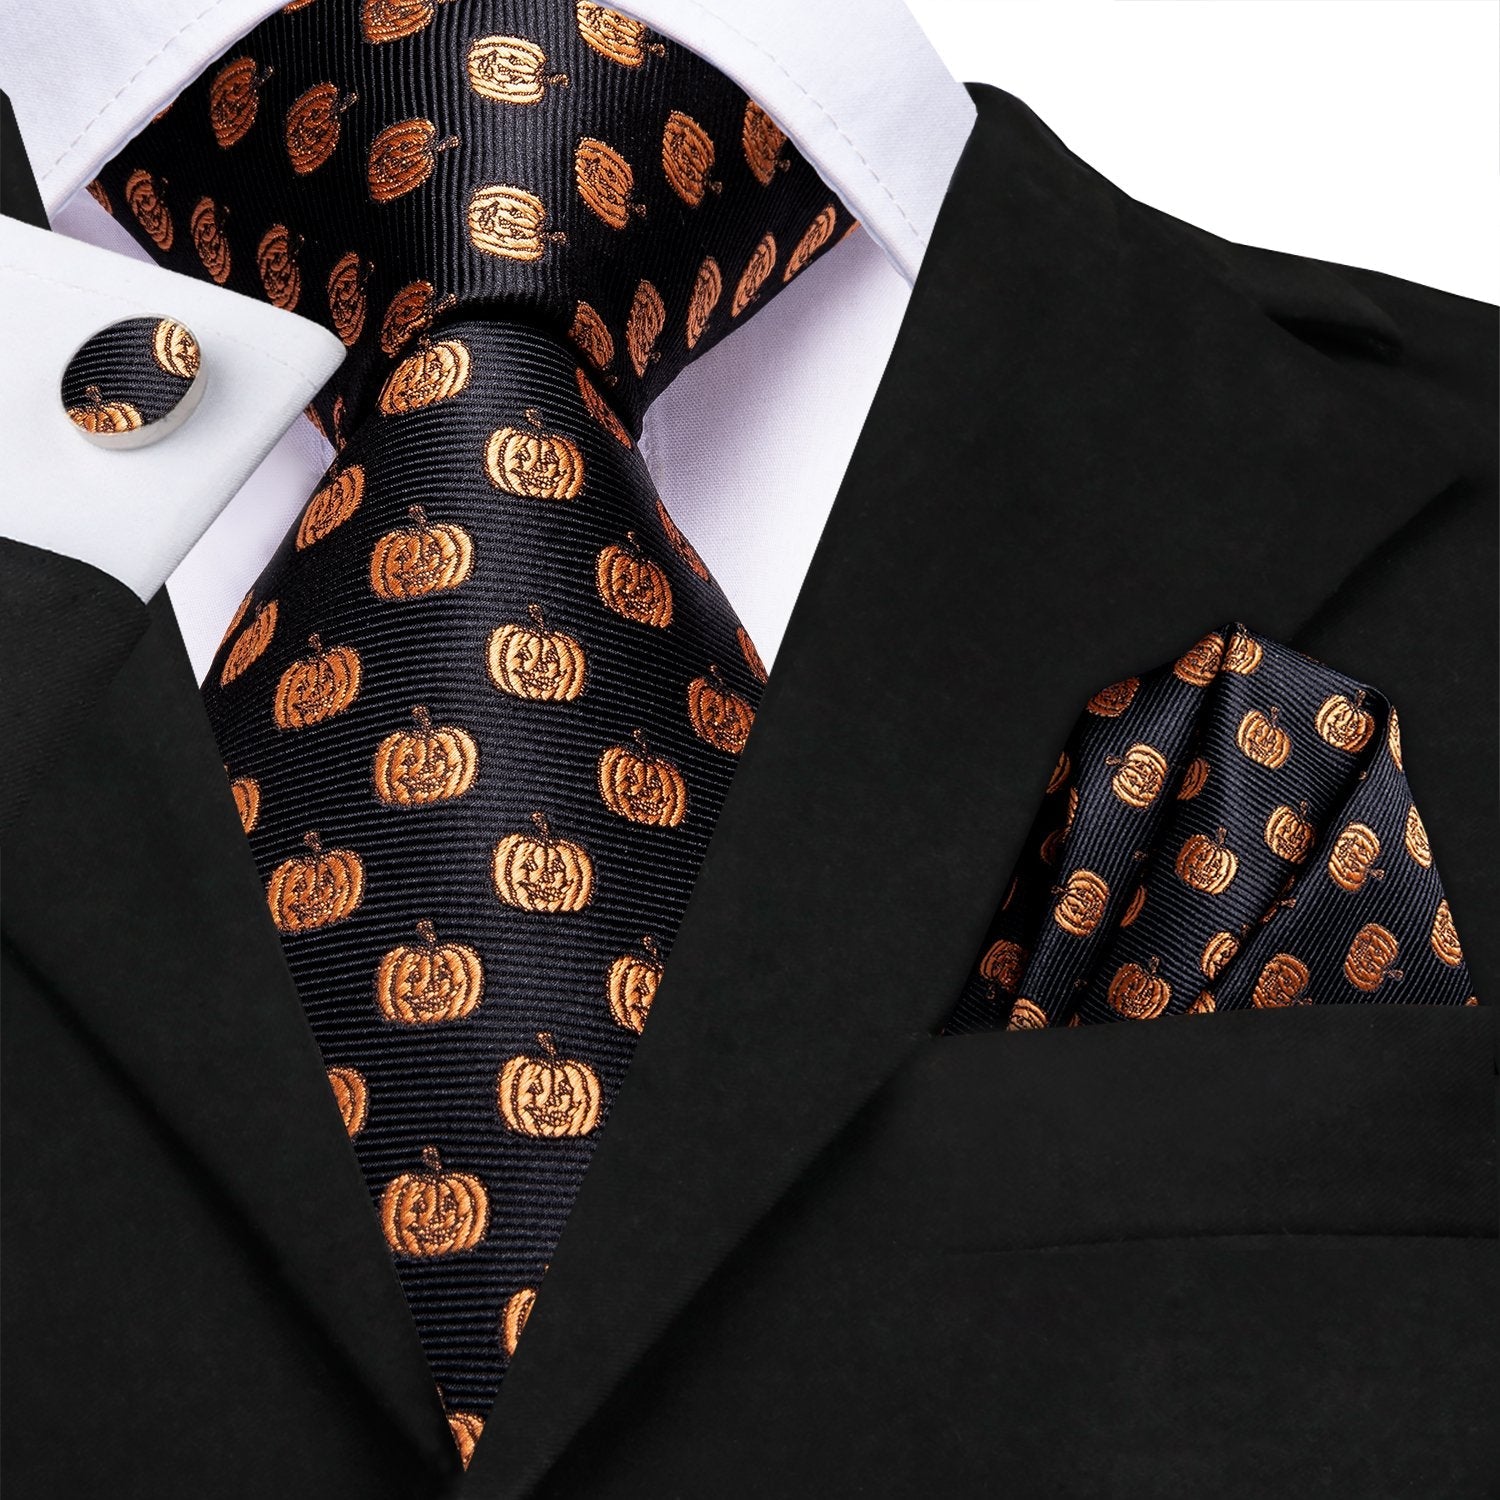 Black Golden Smiley face Tie Pocket Square Cufflinks Set with Wedding Brooch